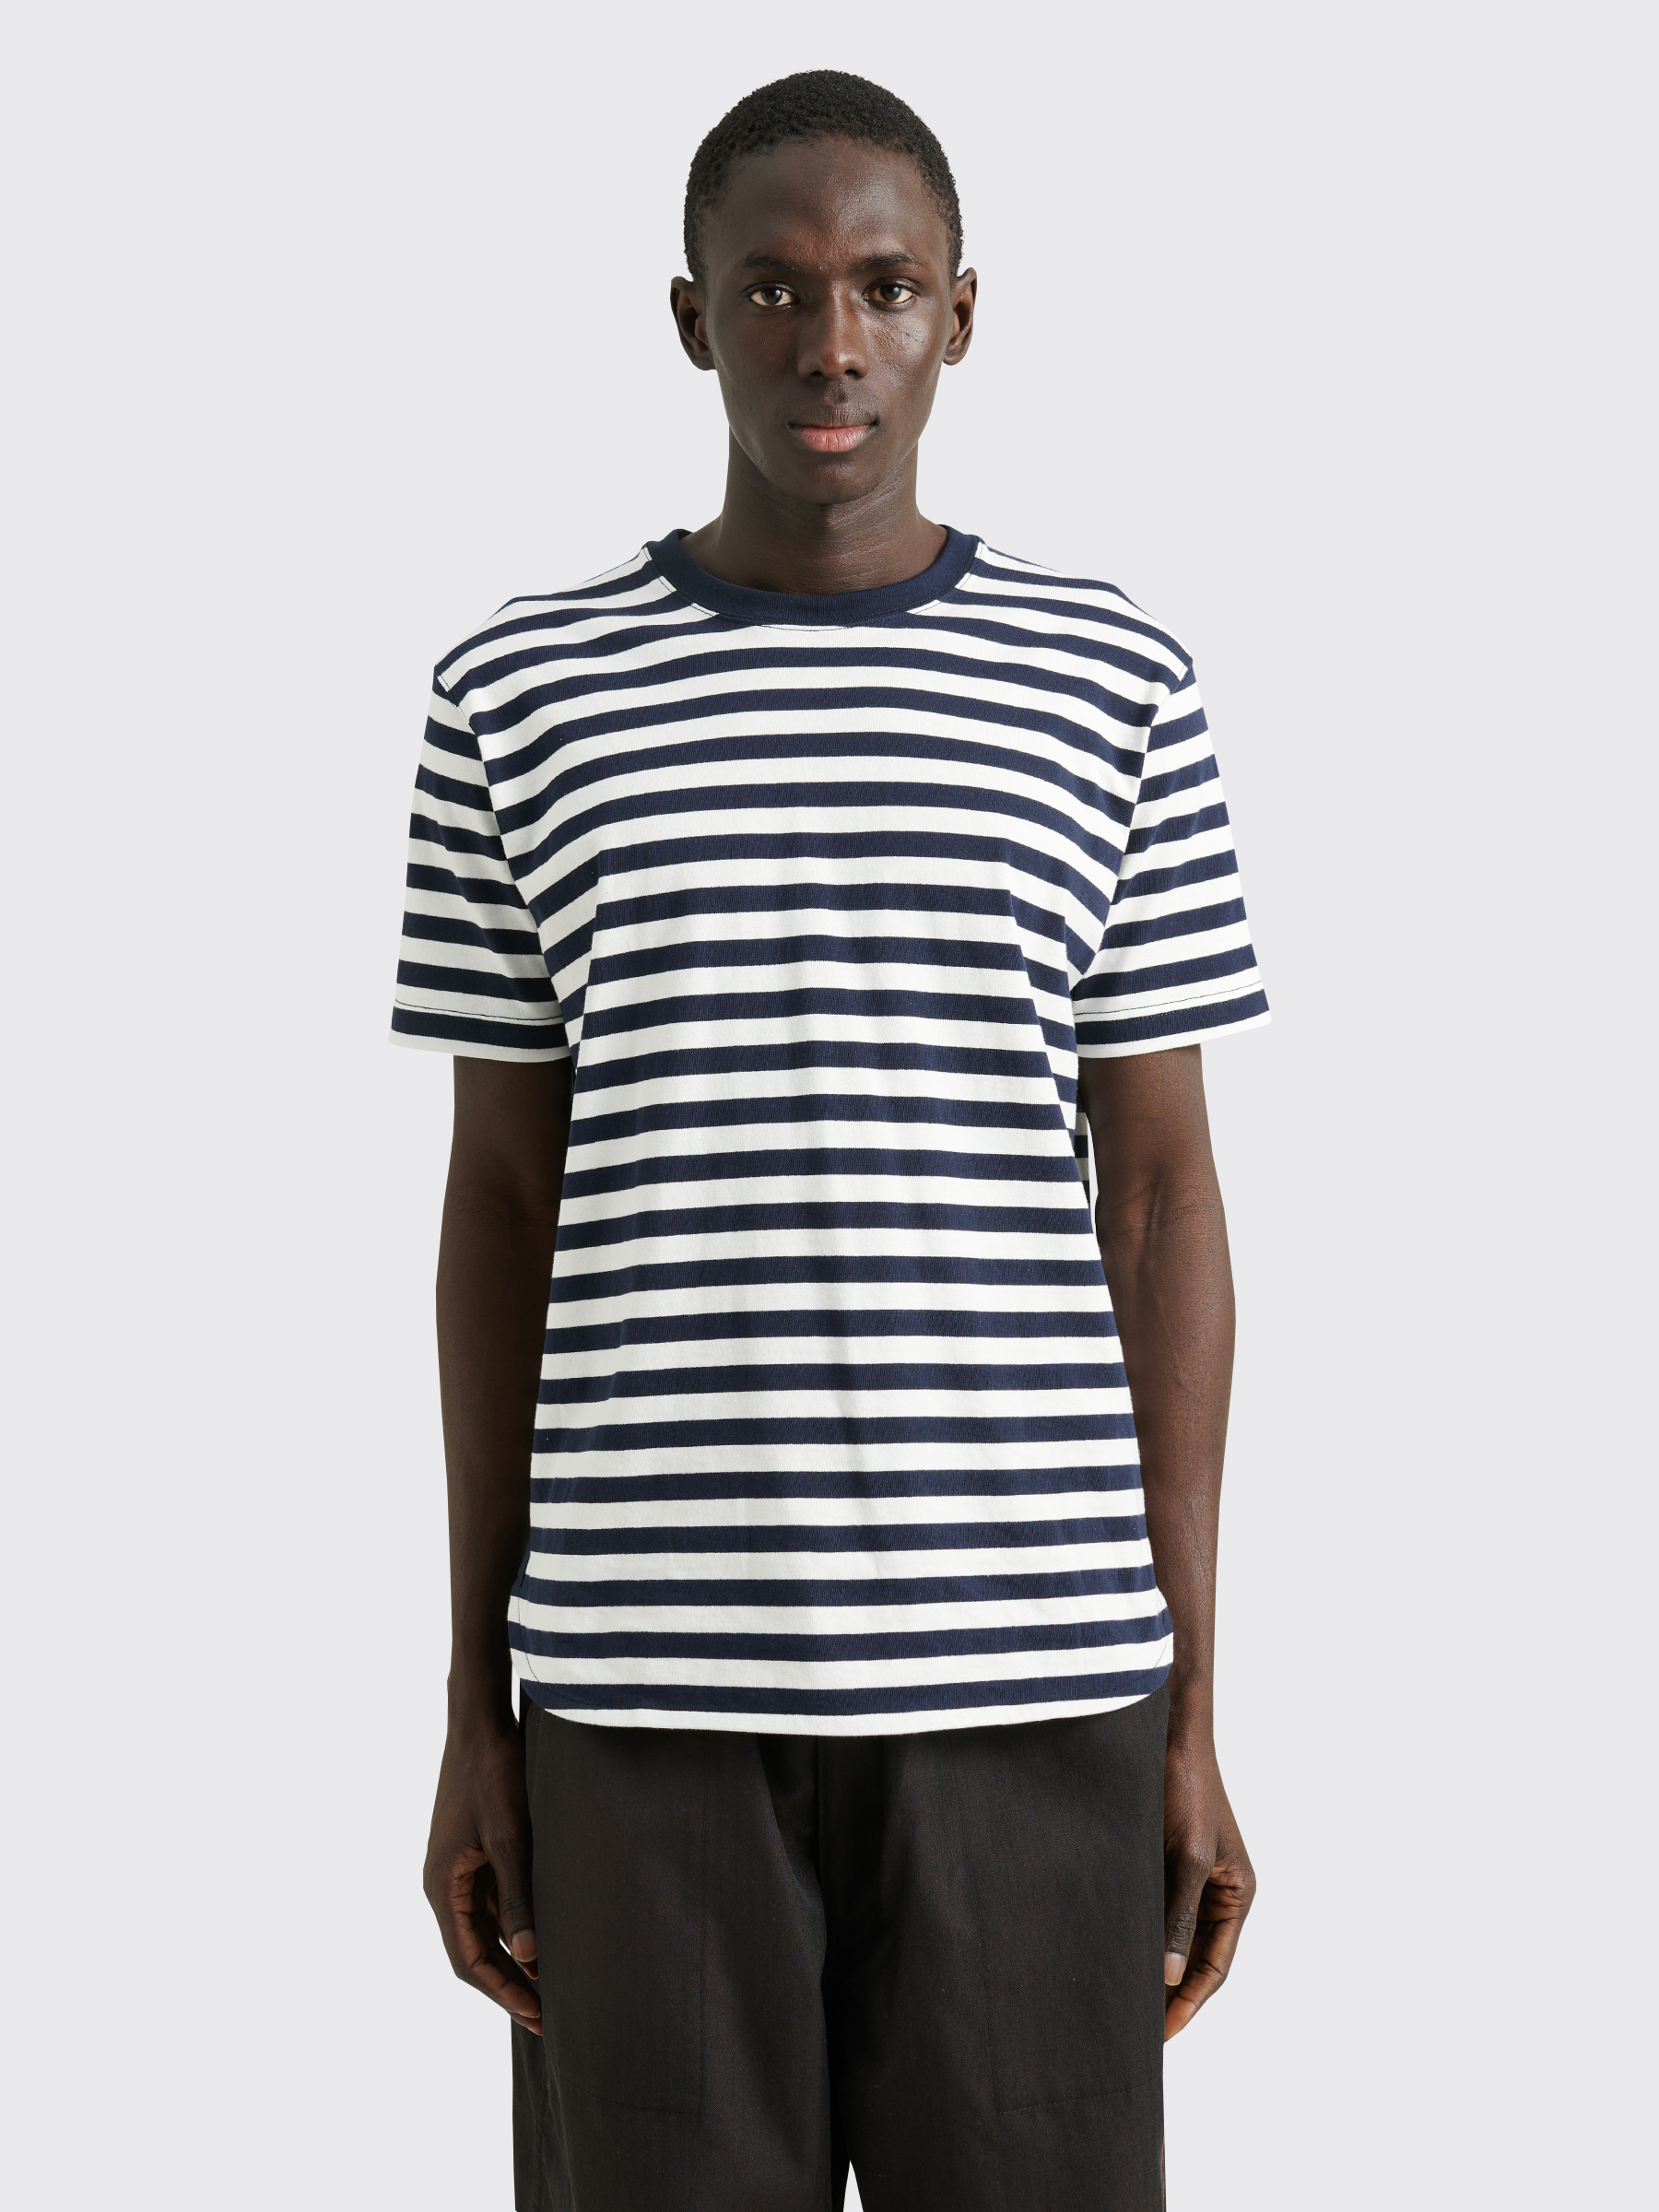 Très Bien - Junya Watanabe MAN T-shirt Stripe Navy / White